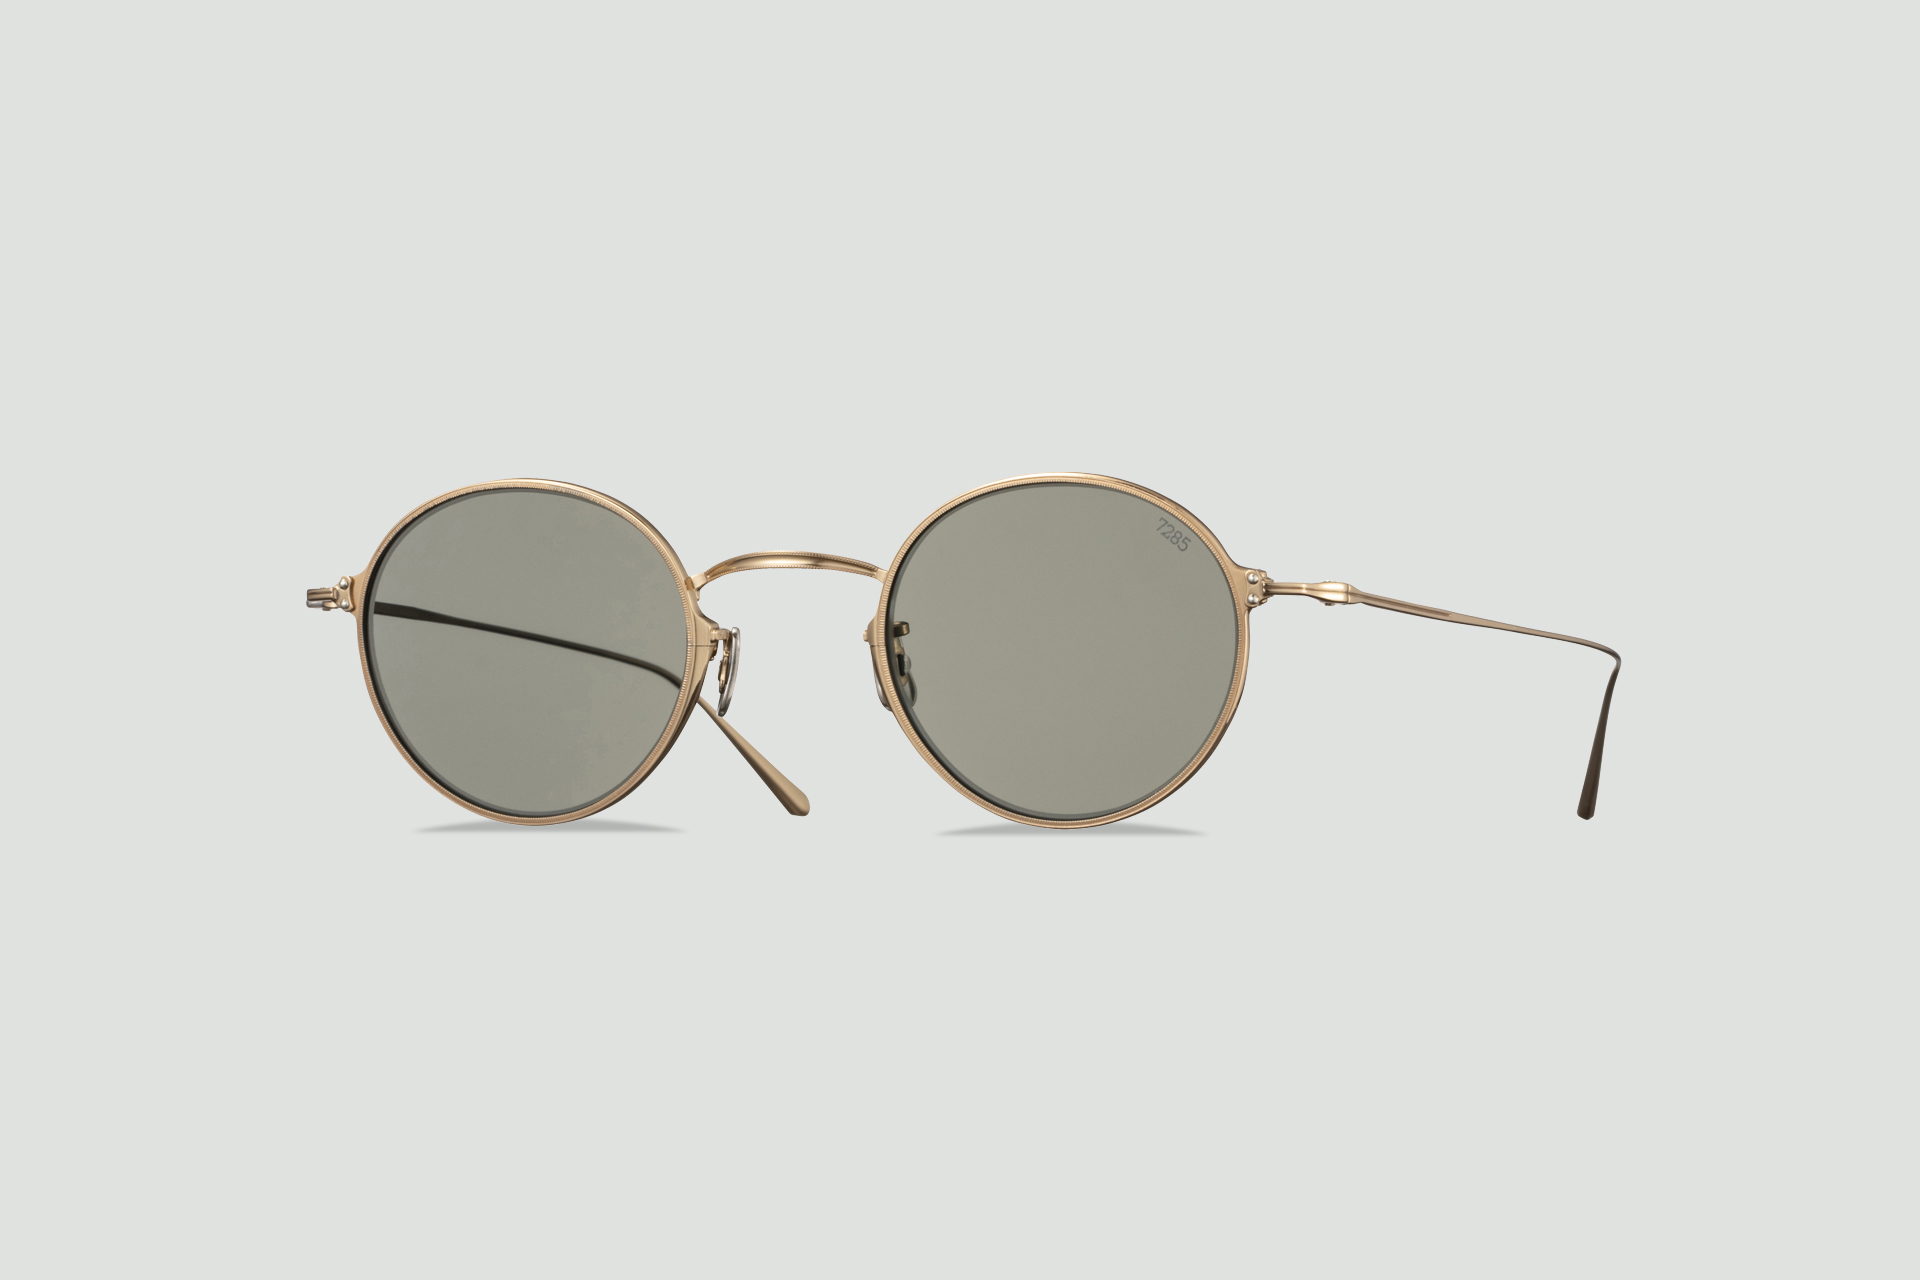 Round polarized glasses johnny depp gold round frames men G15 green  sunglasses